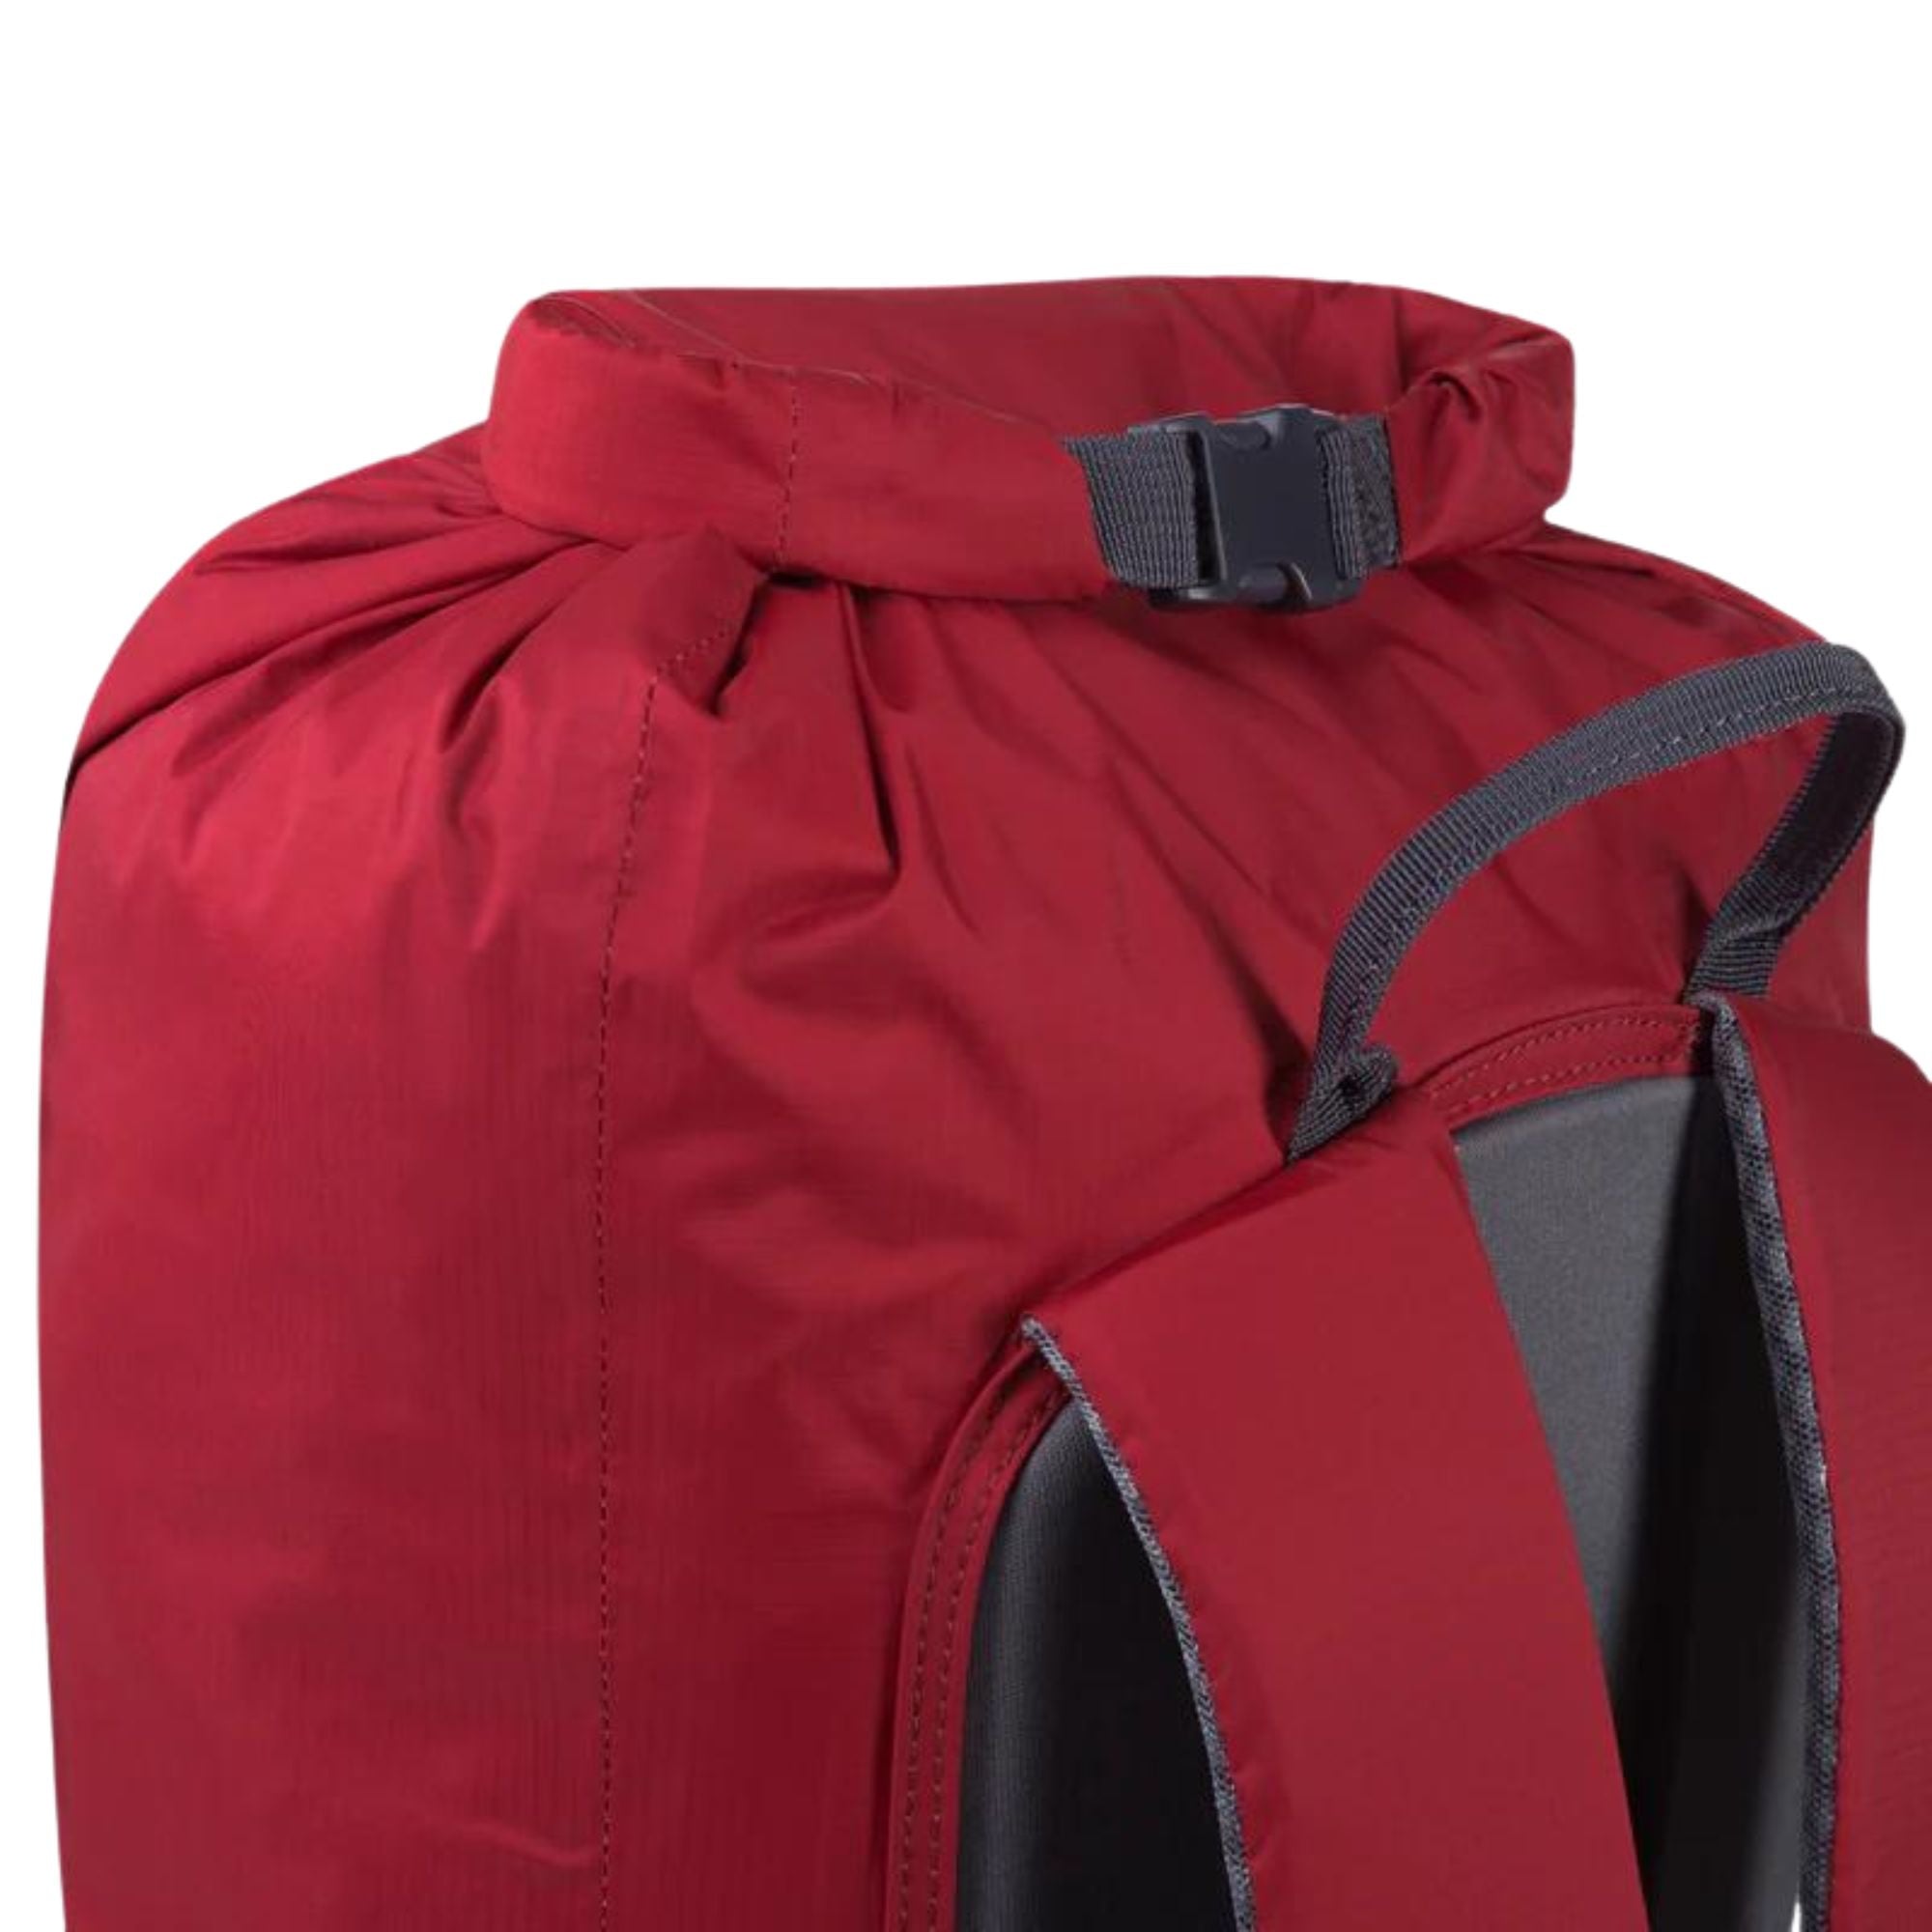 Trekmates Drypack 20 LTR | TREKMATES | Portwest - The Outdoor Shop